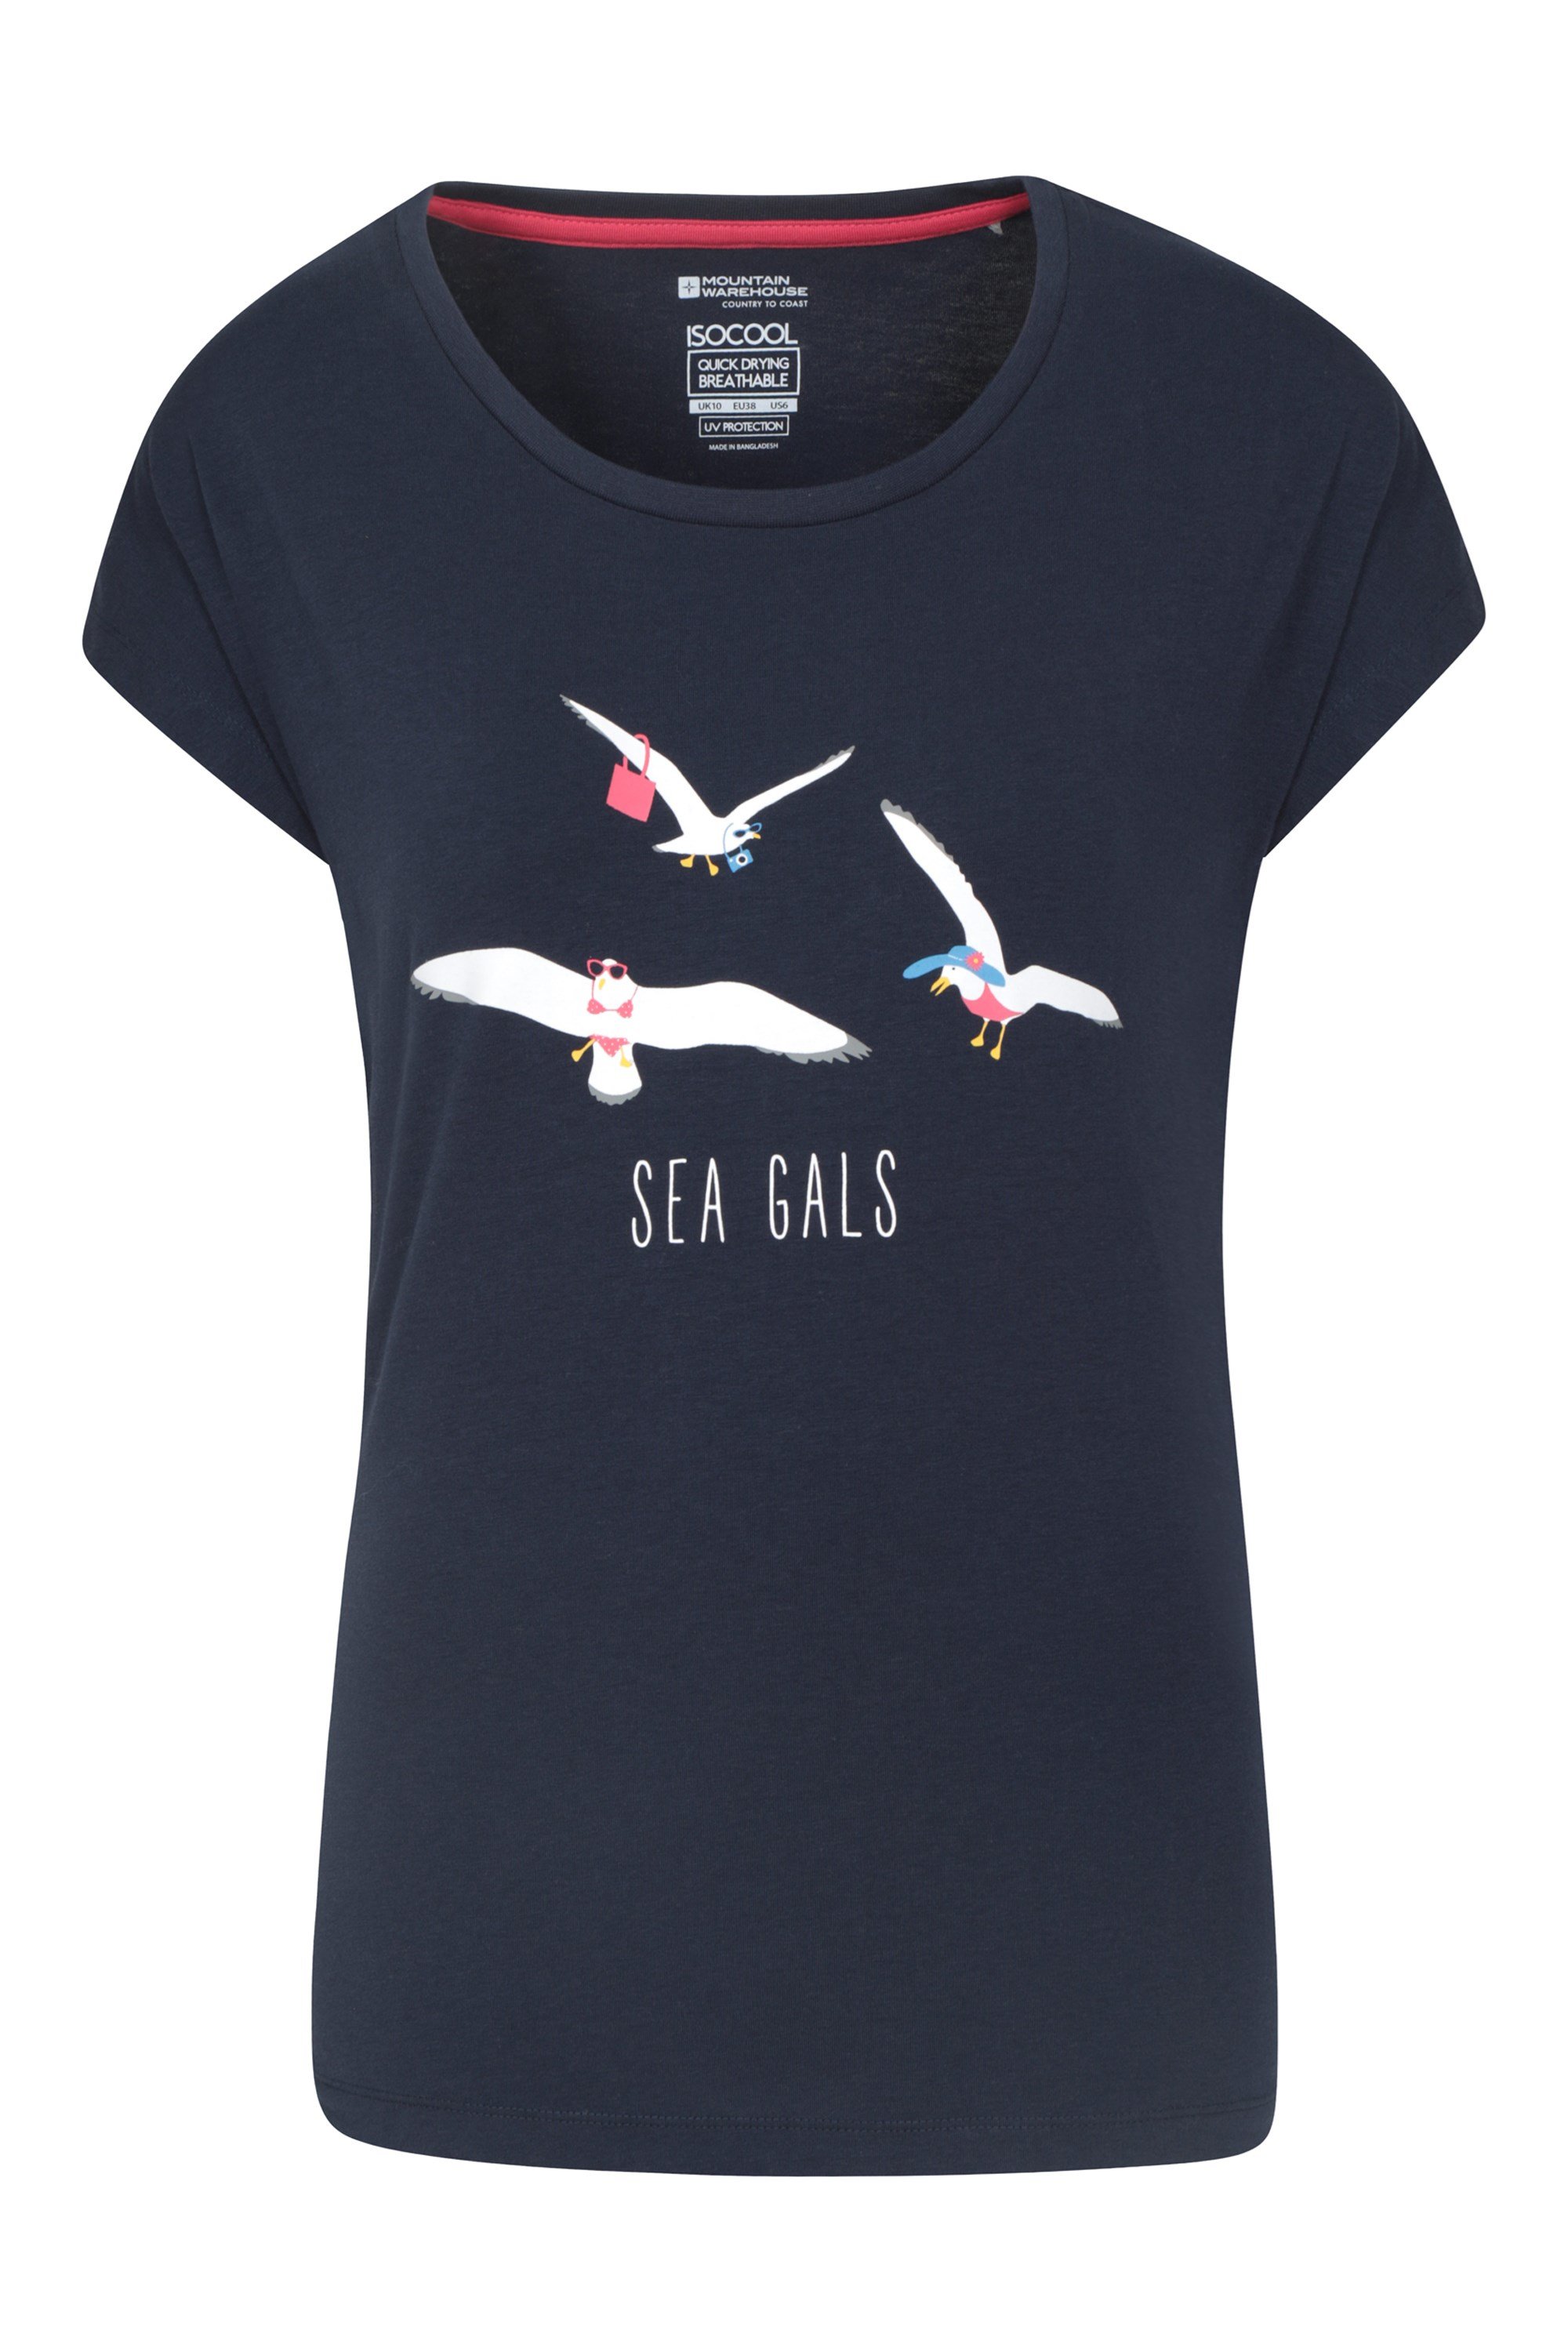 Sea Gals - koszulka damska - Navy